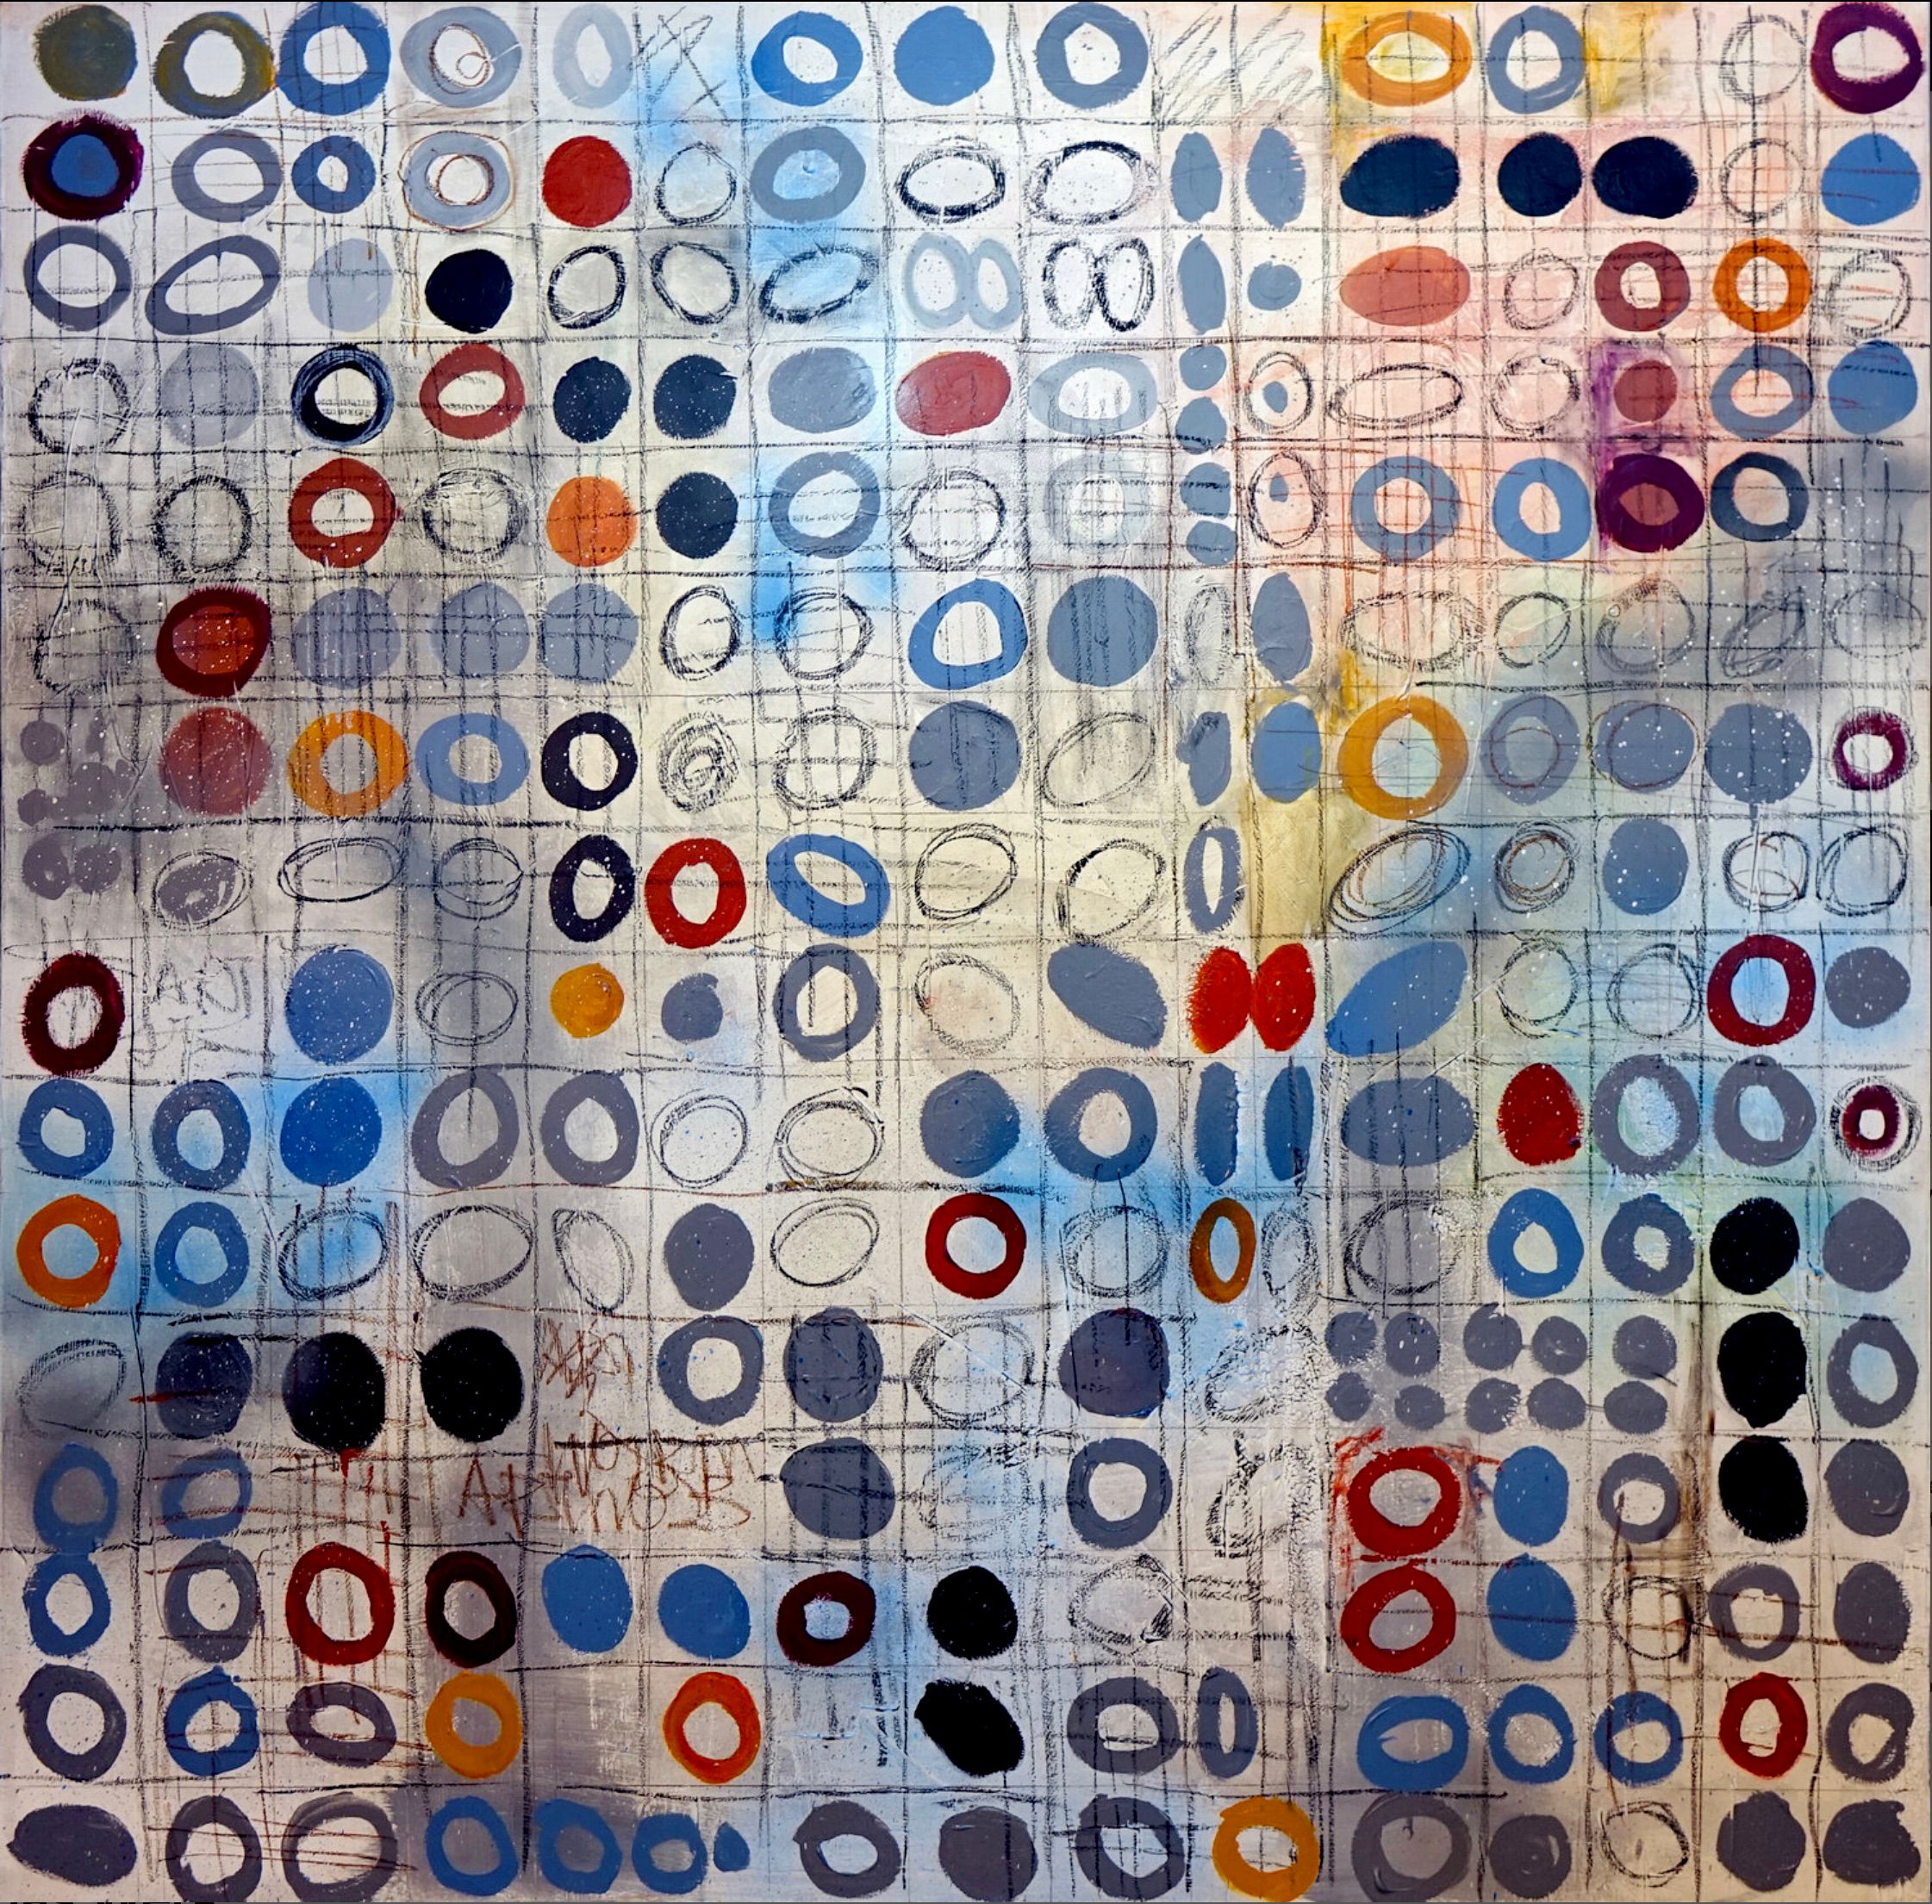 Wojtek Babski, "Circles 3", cerchi e punti, pittura pop art di grande formato su tela